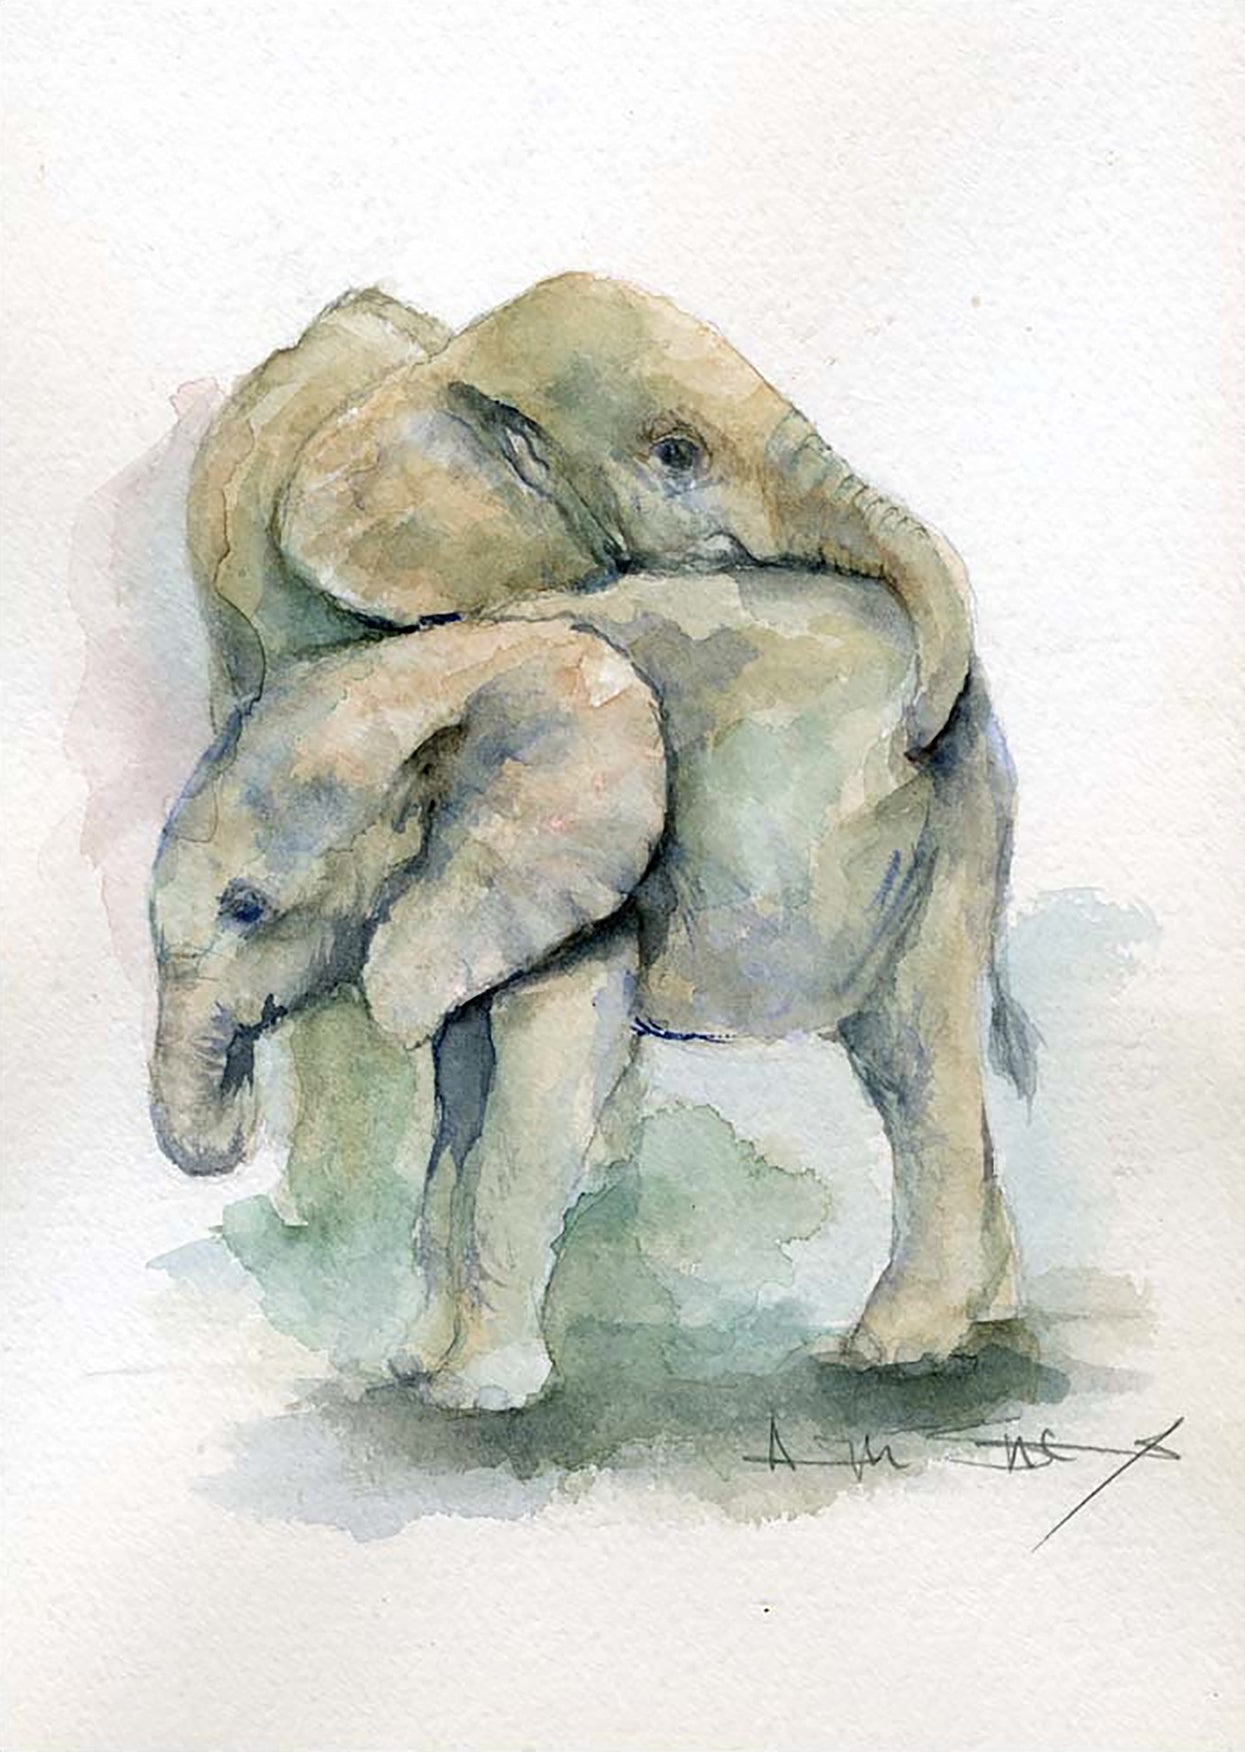 Safari Journal / Blog by Safari Fusion | Happy World Elephant Day | Elephant watercolour by Angela Sheldrick / Kenya